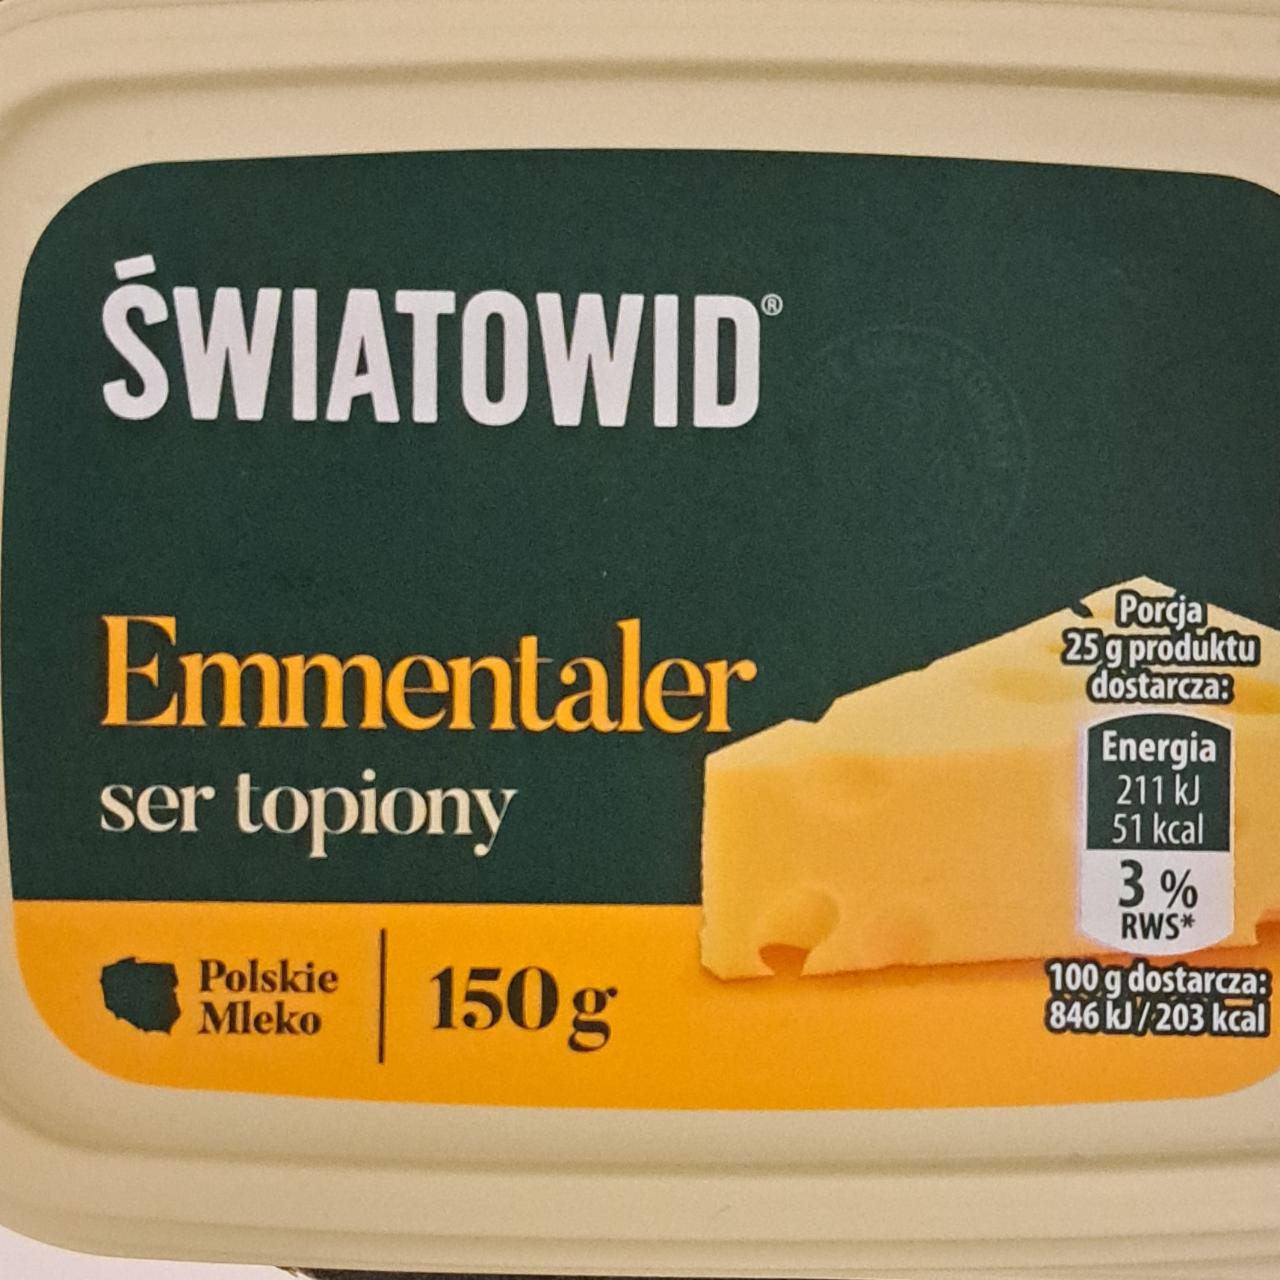 Фото - Emmentaler ser topiony Światowid